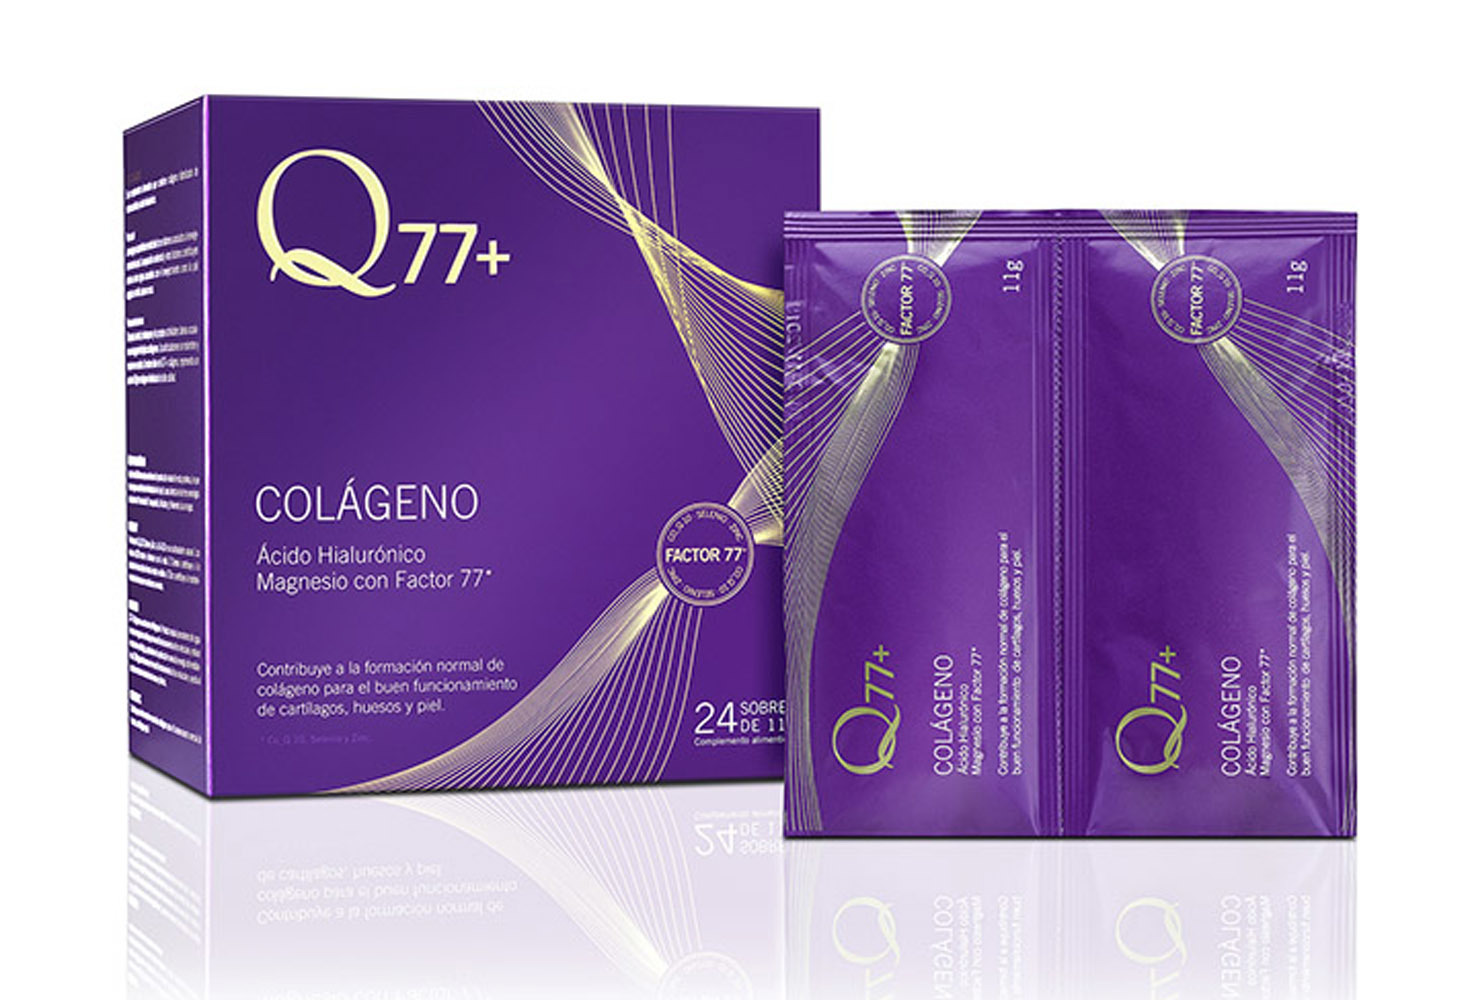 Complemento alimenticio Q77+ Colágeno.